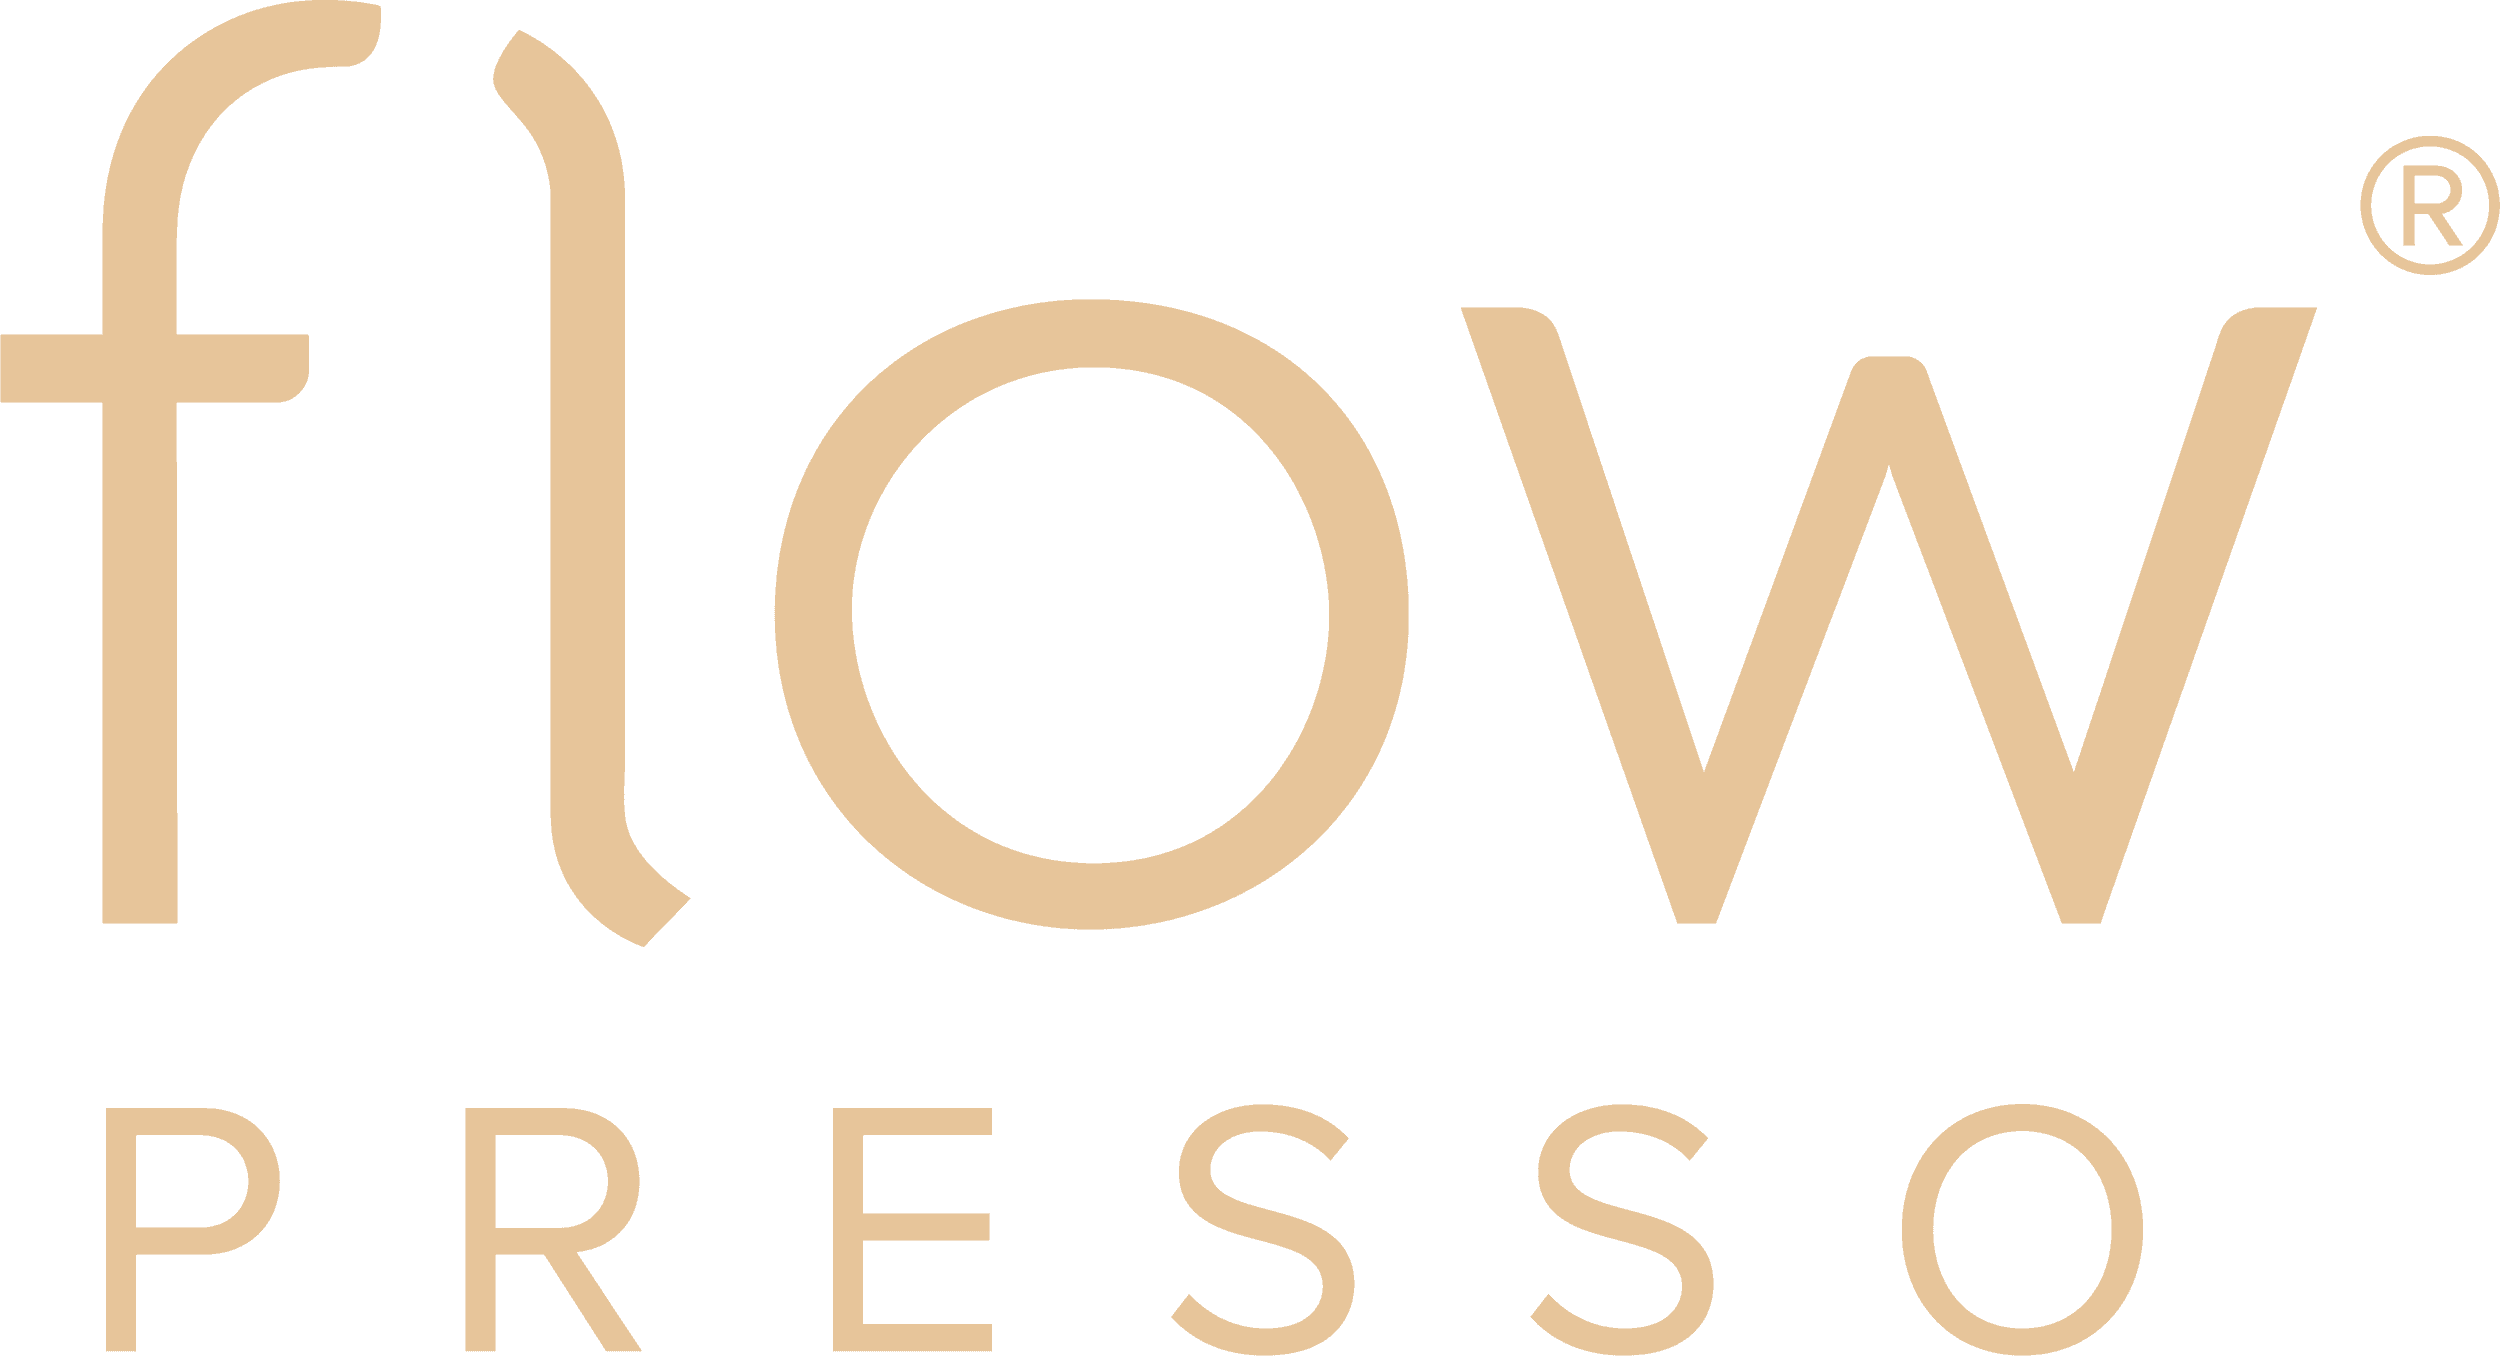 FLO001+Flowpresso+logo_peachy+beige